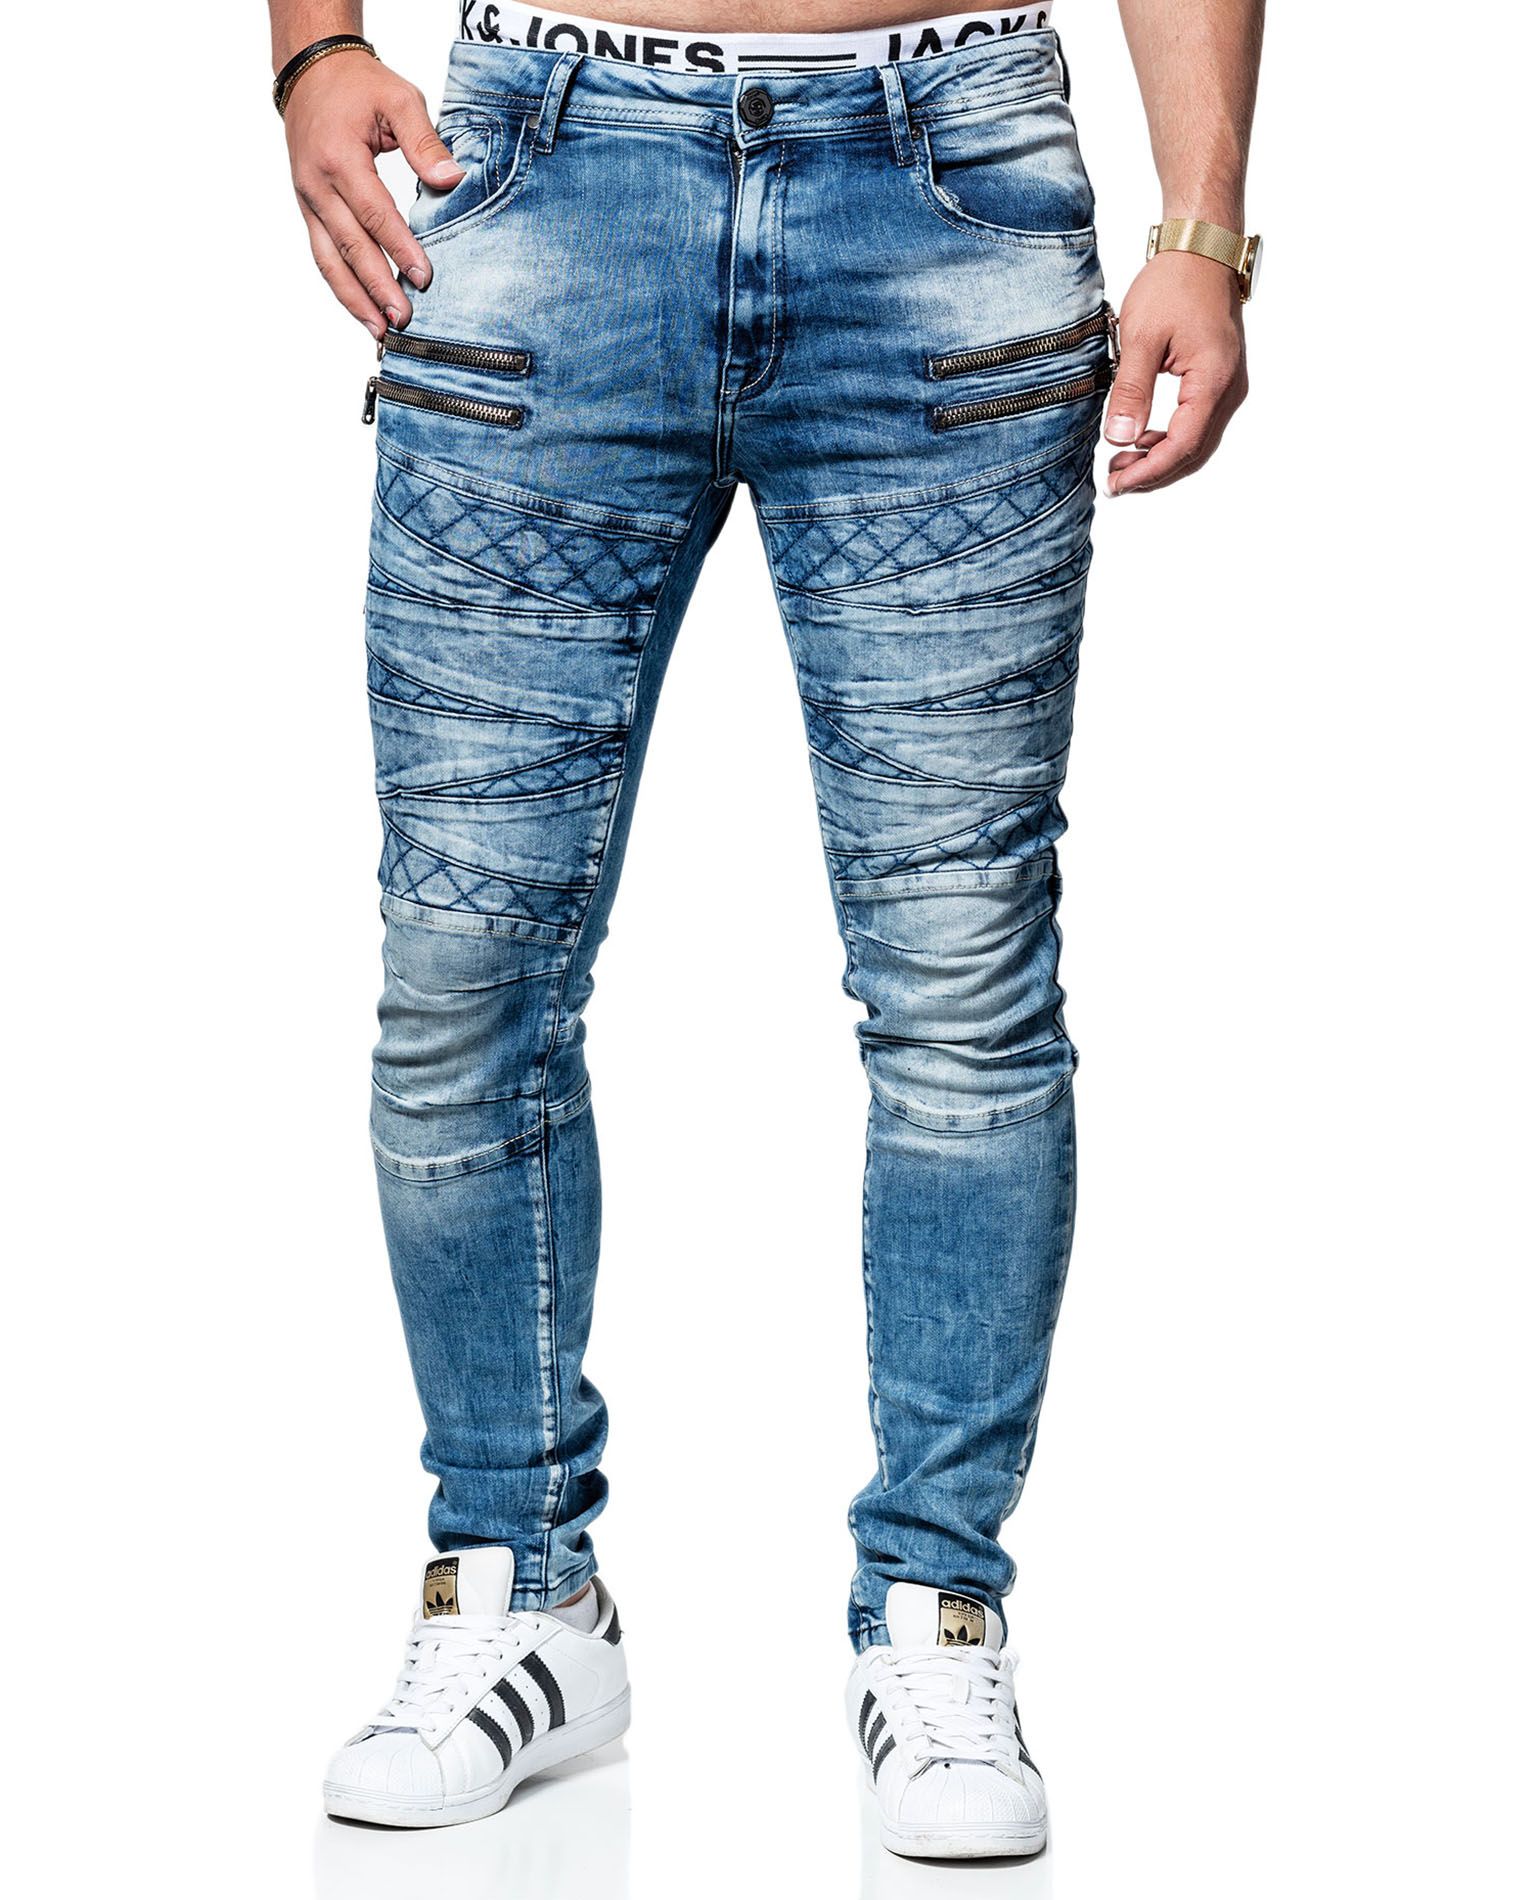 Blue Zipper Jeans L32 Cipo & Baxx - 505 - Jeans - Jerone